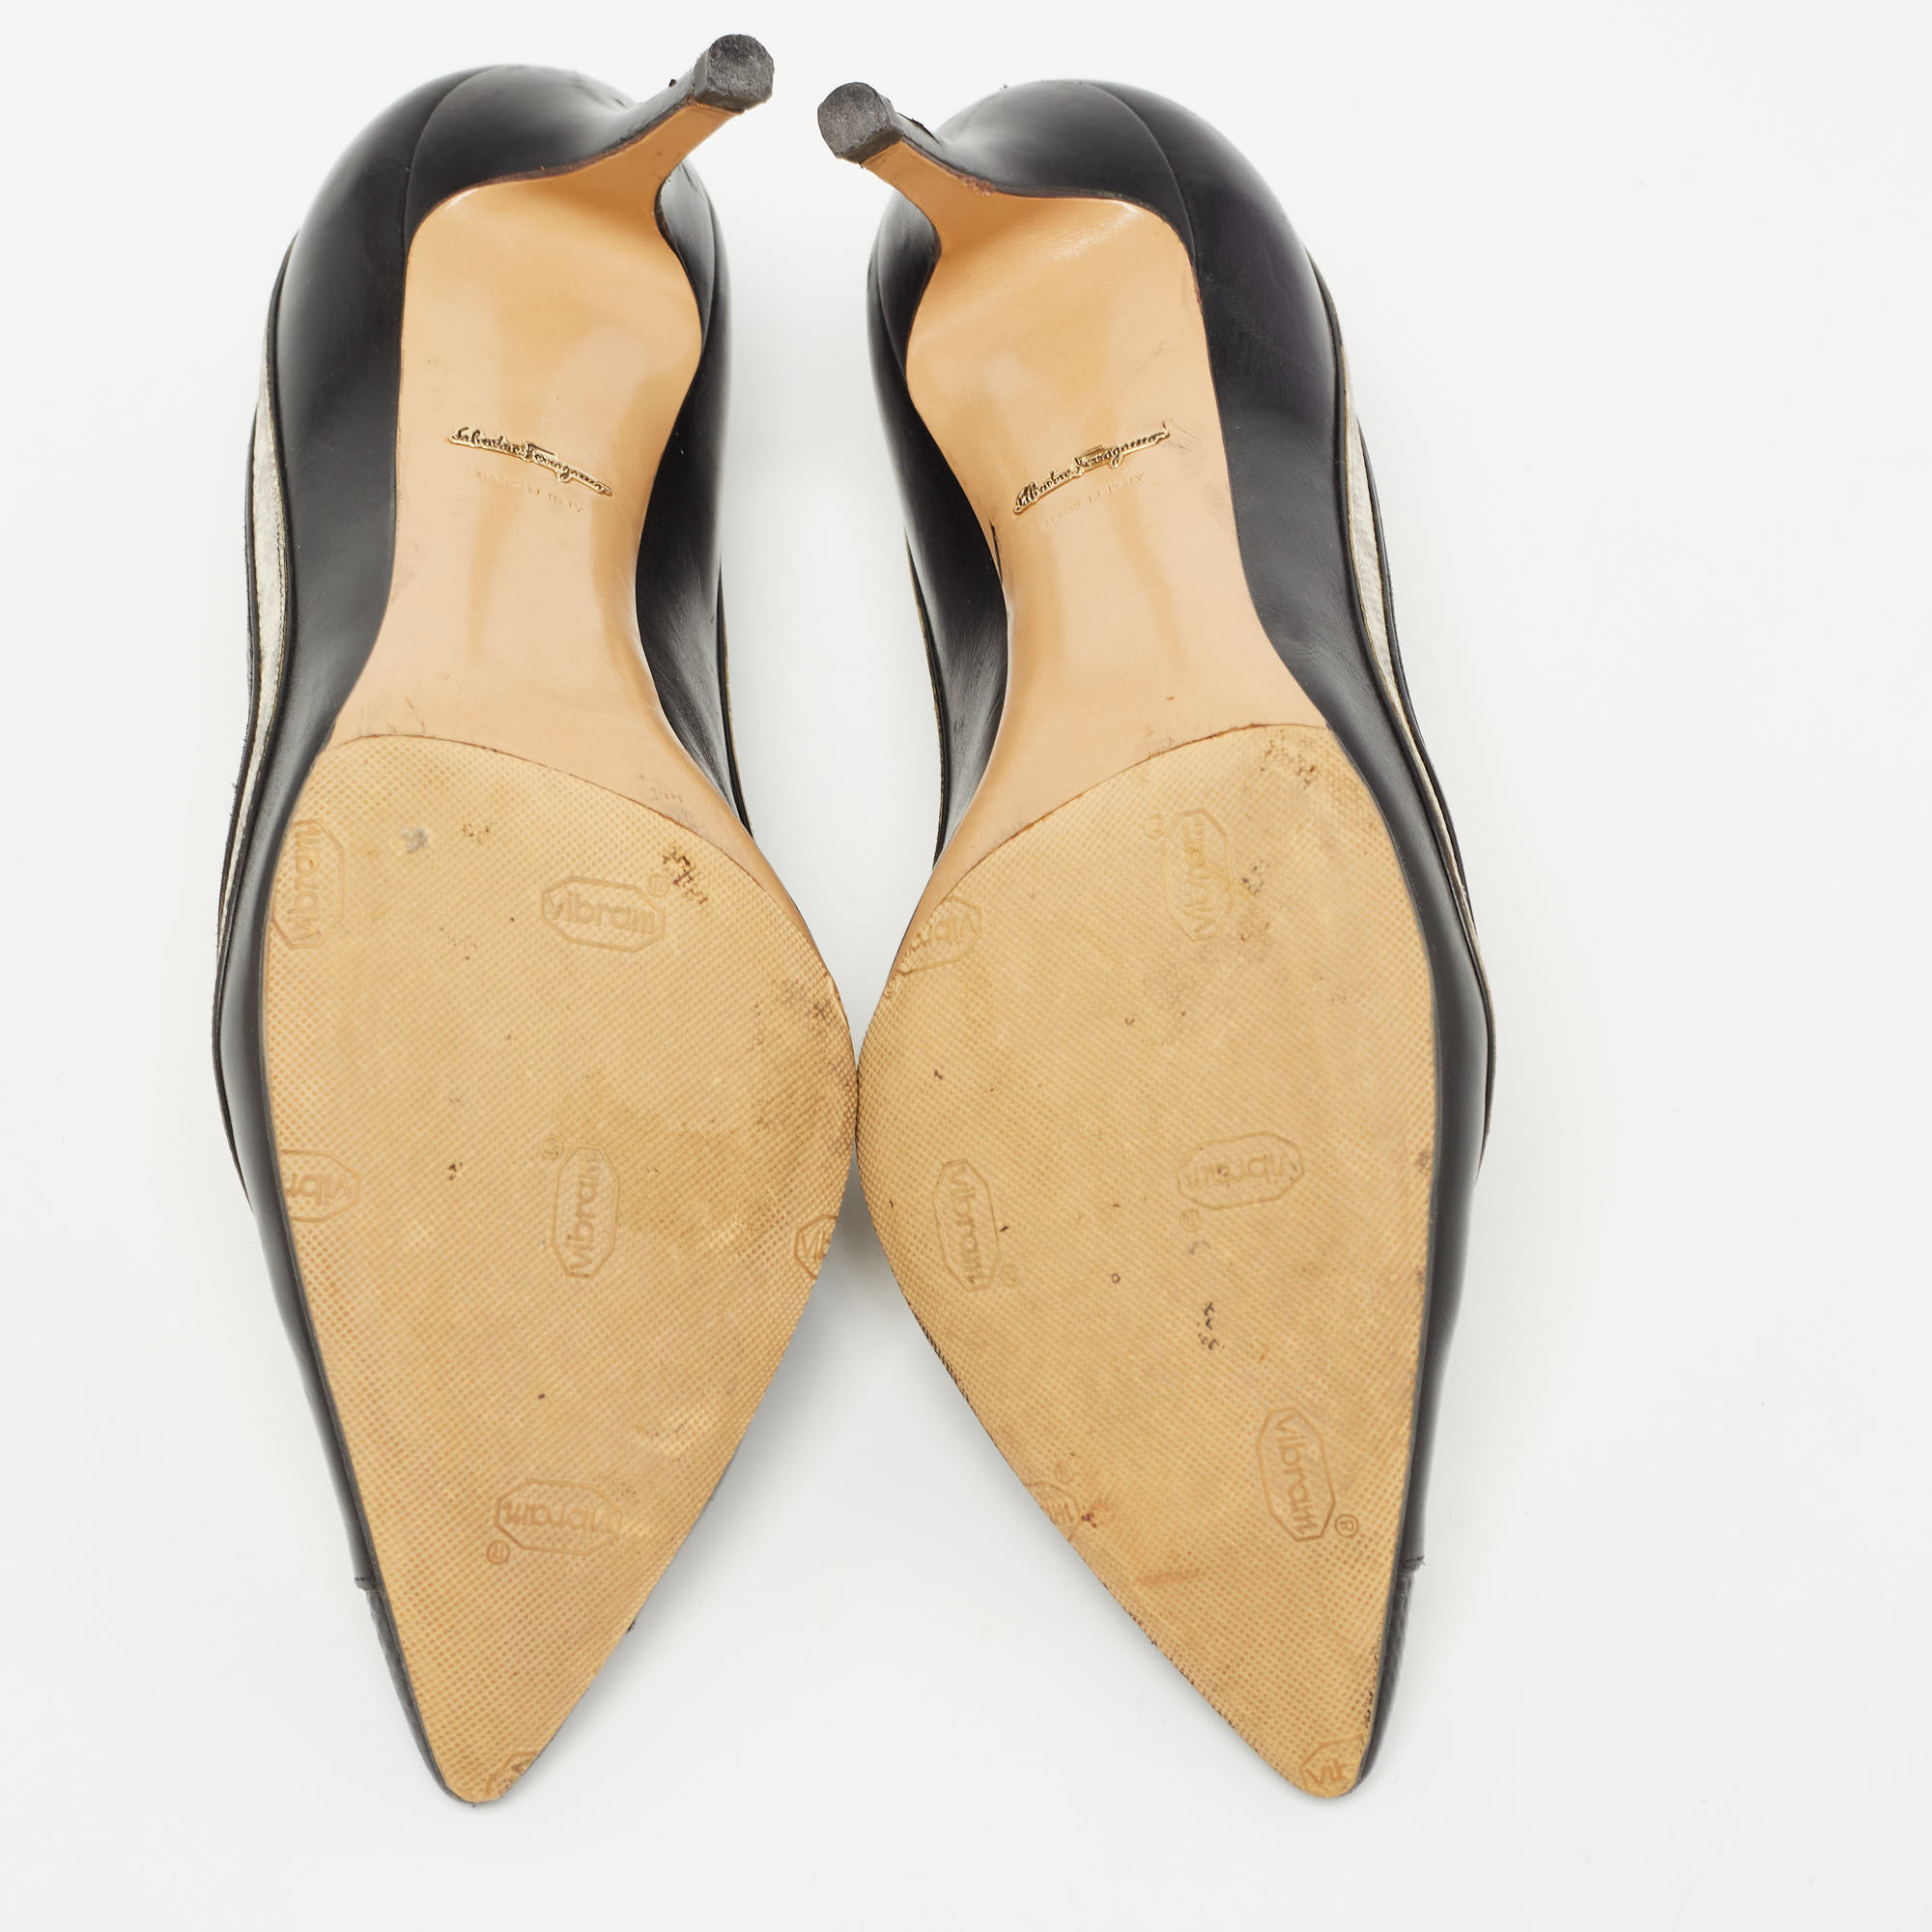 Salvatore Ferragamo Black/White Textured Leather Pointed Toe Pumps Size 38.5